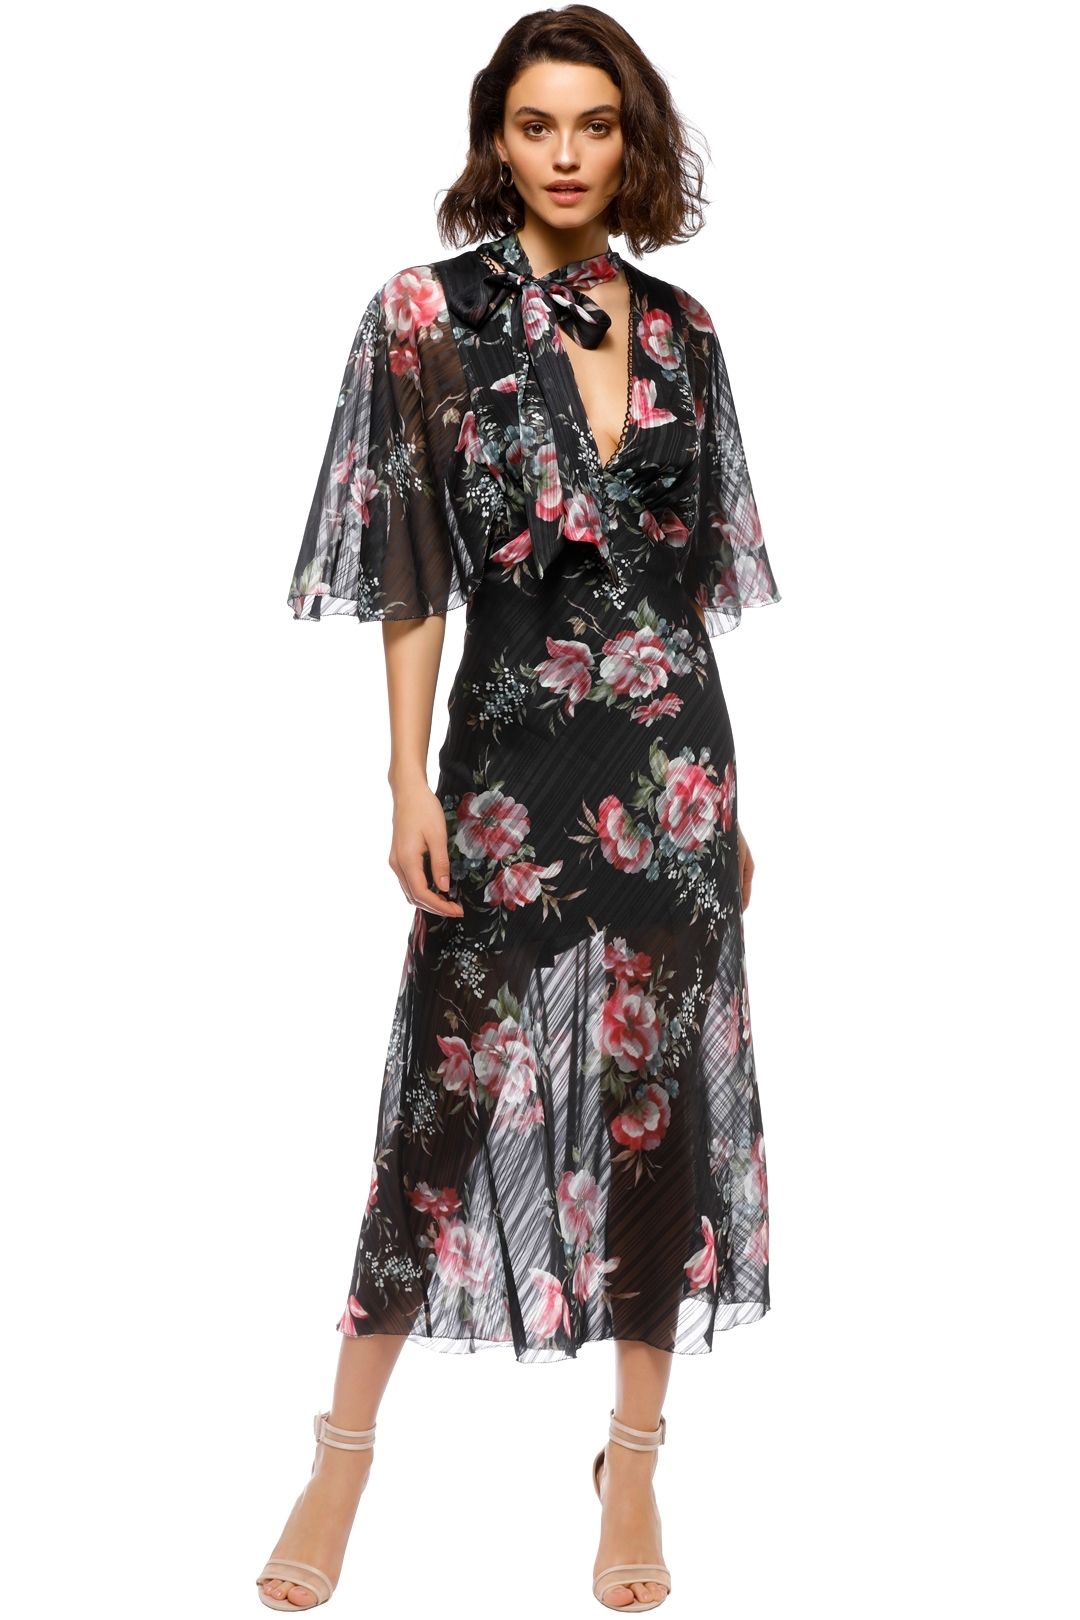 Talulah - Belonging Midi Dress - Black Floral - Front